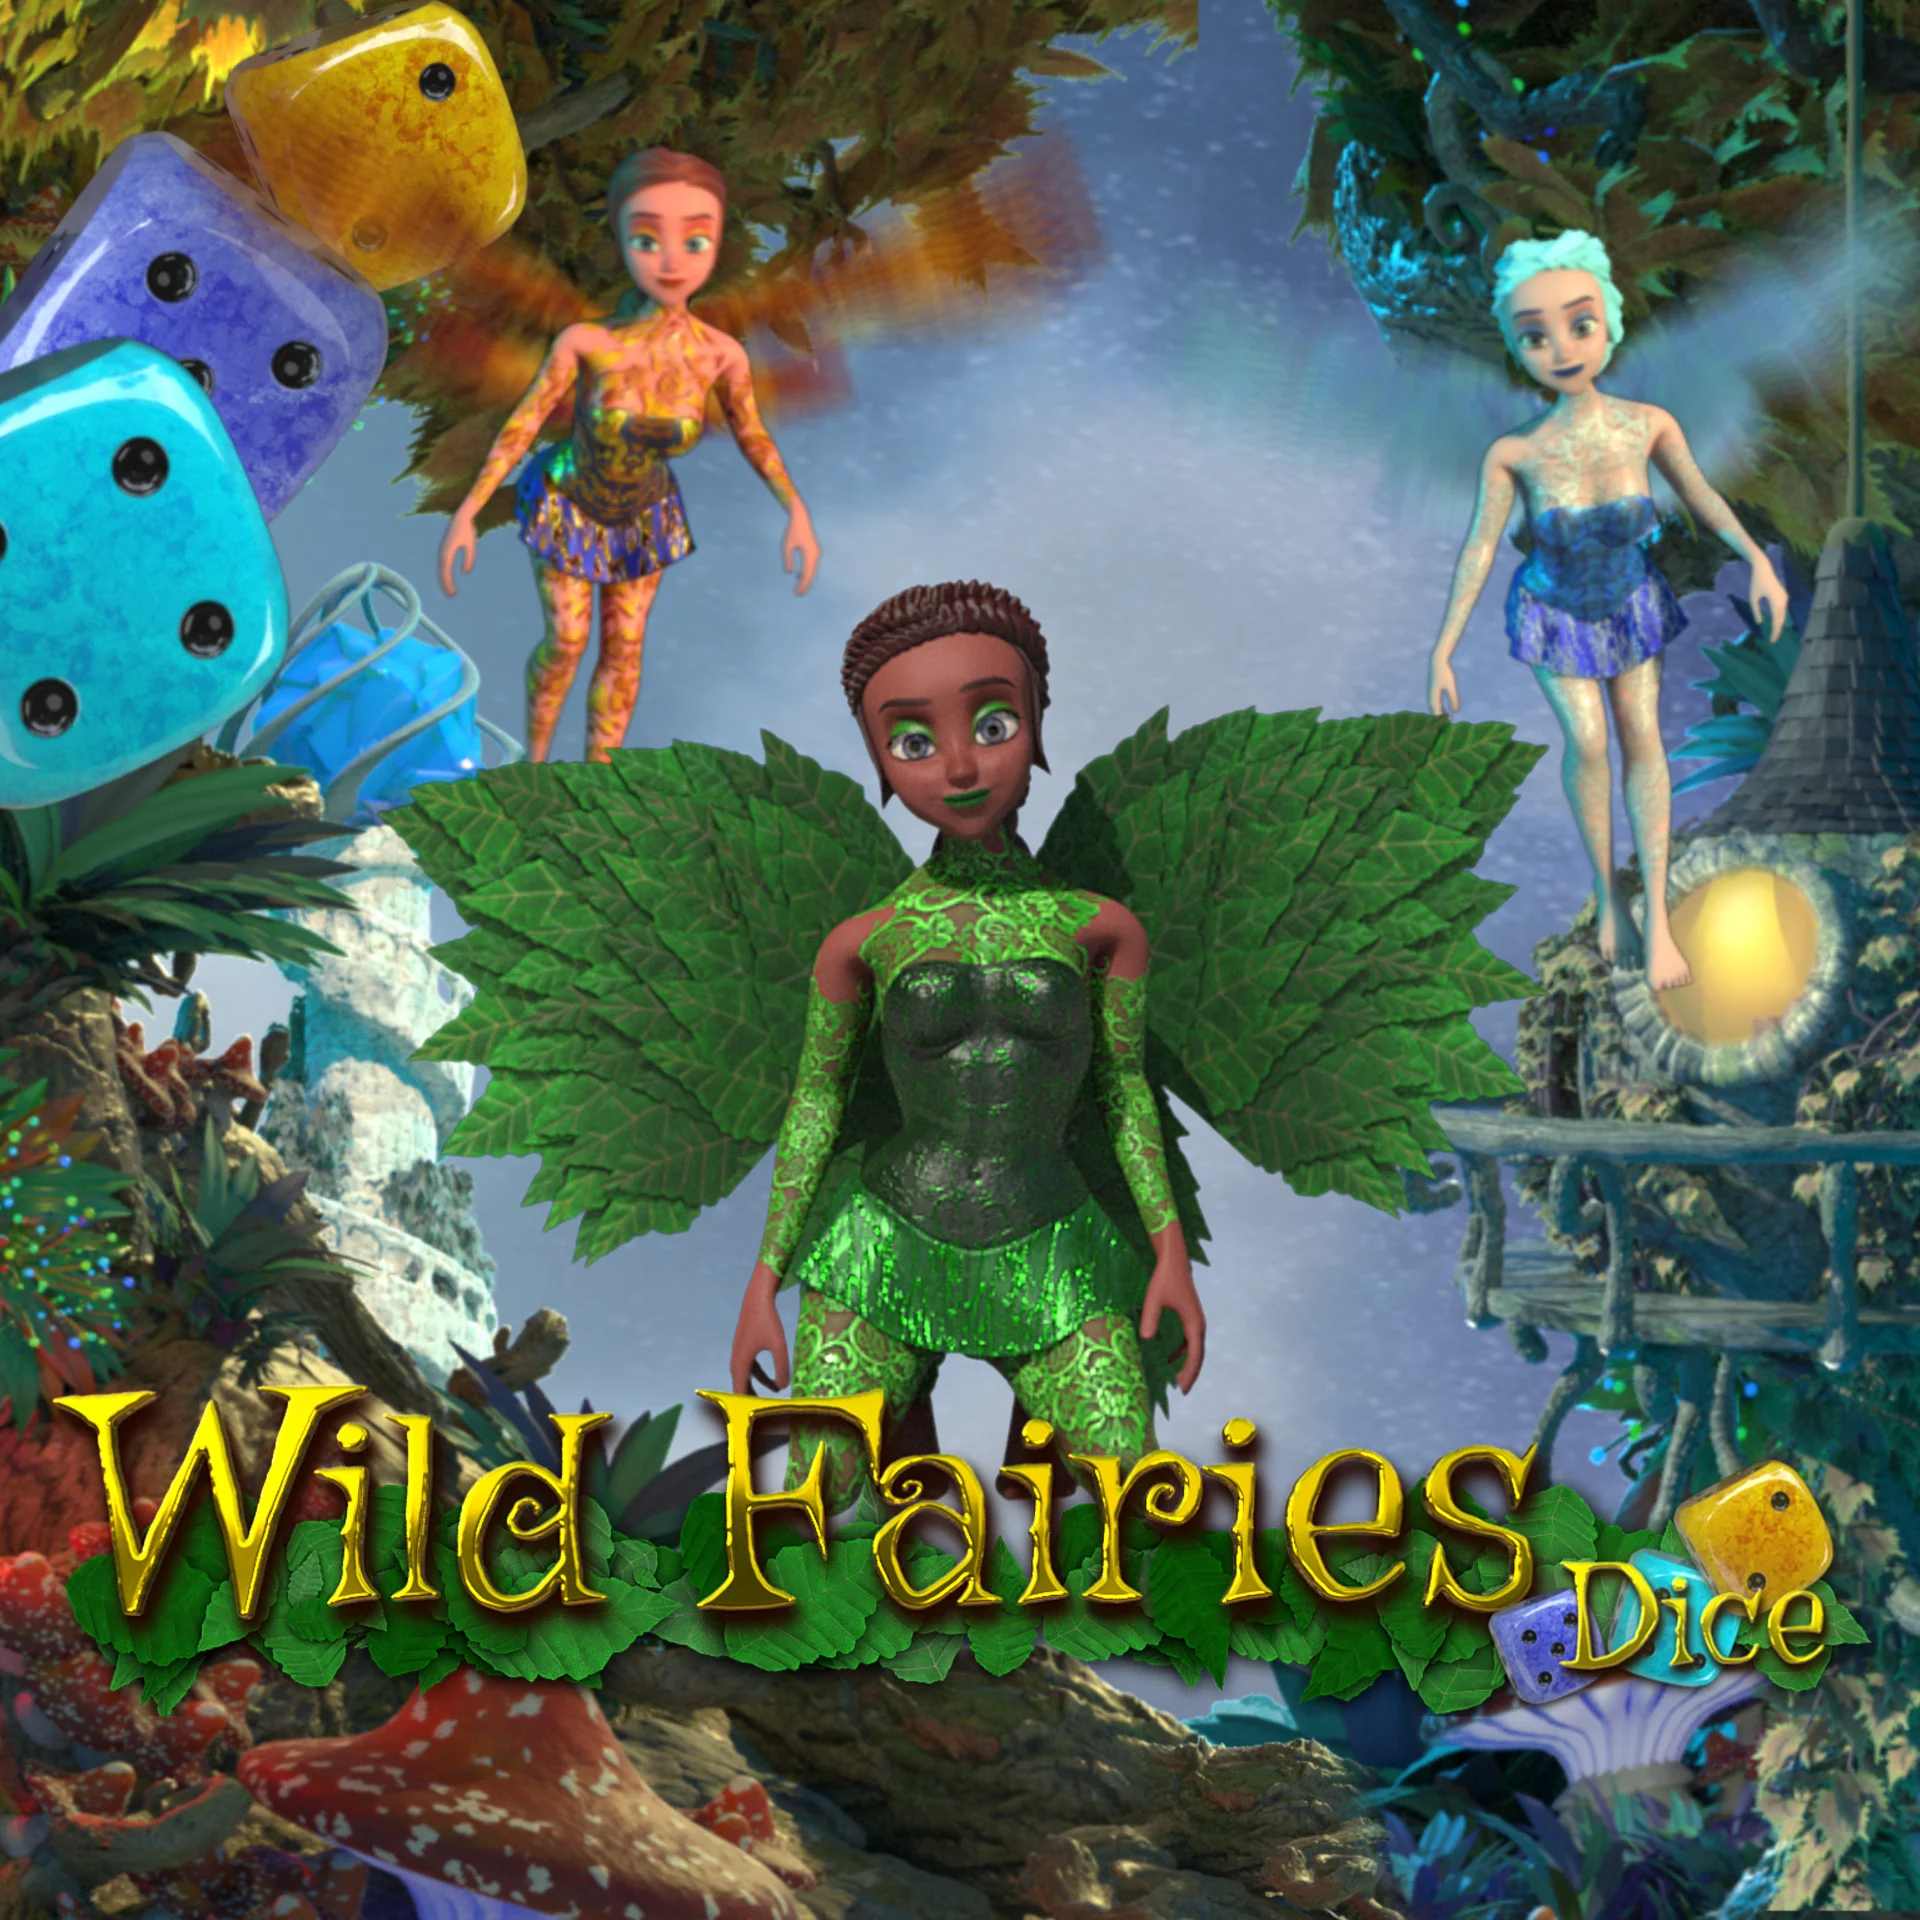 Play Wild Fairies Dice on Starcasinodice.be online casino